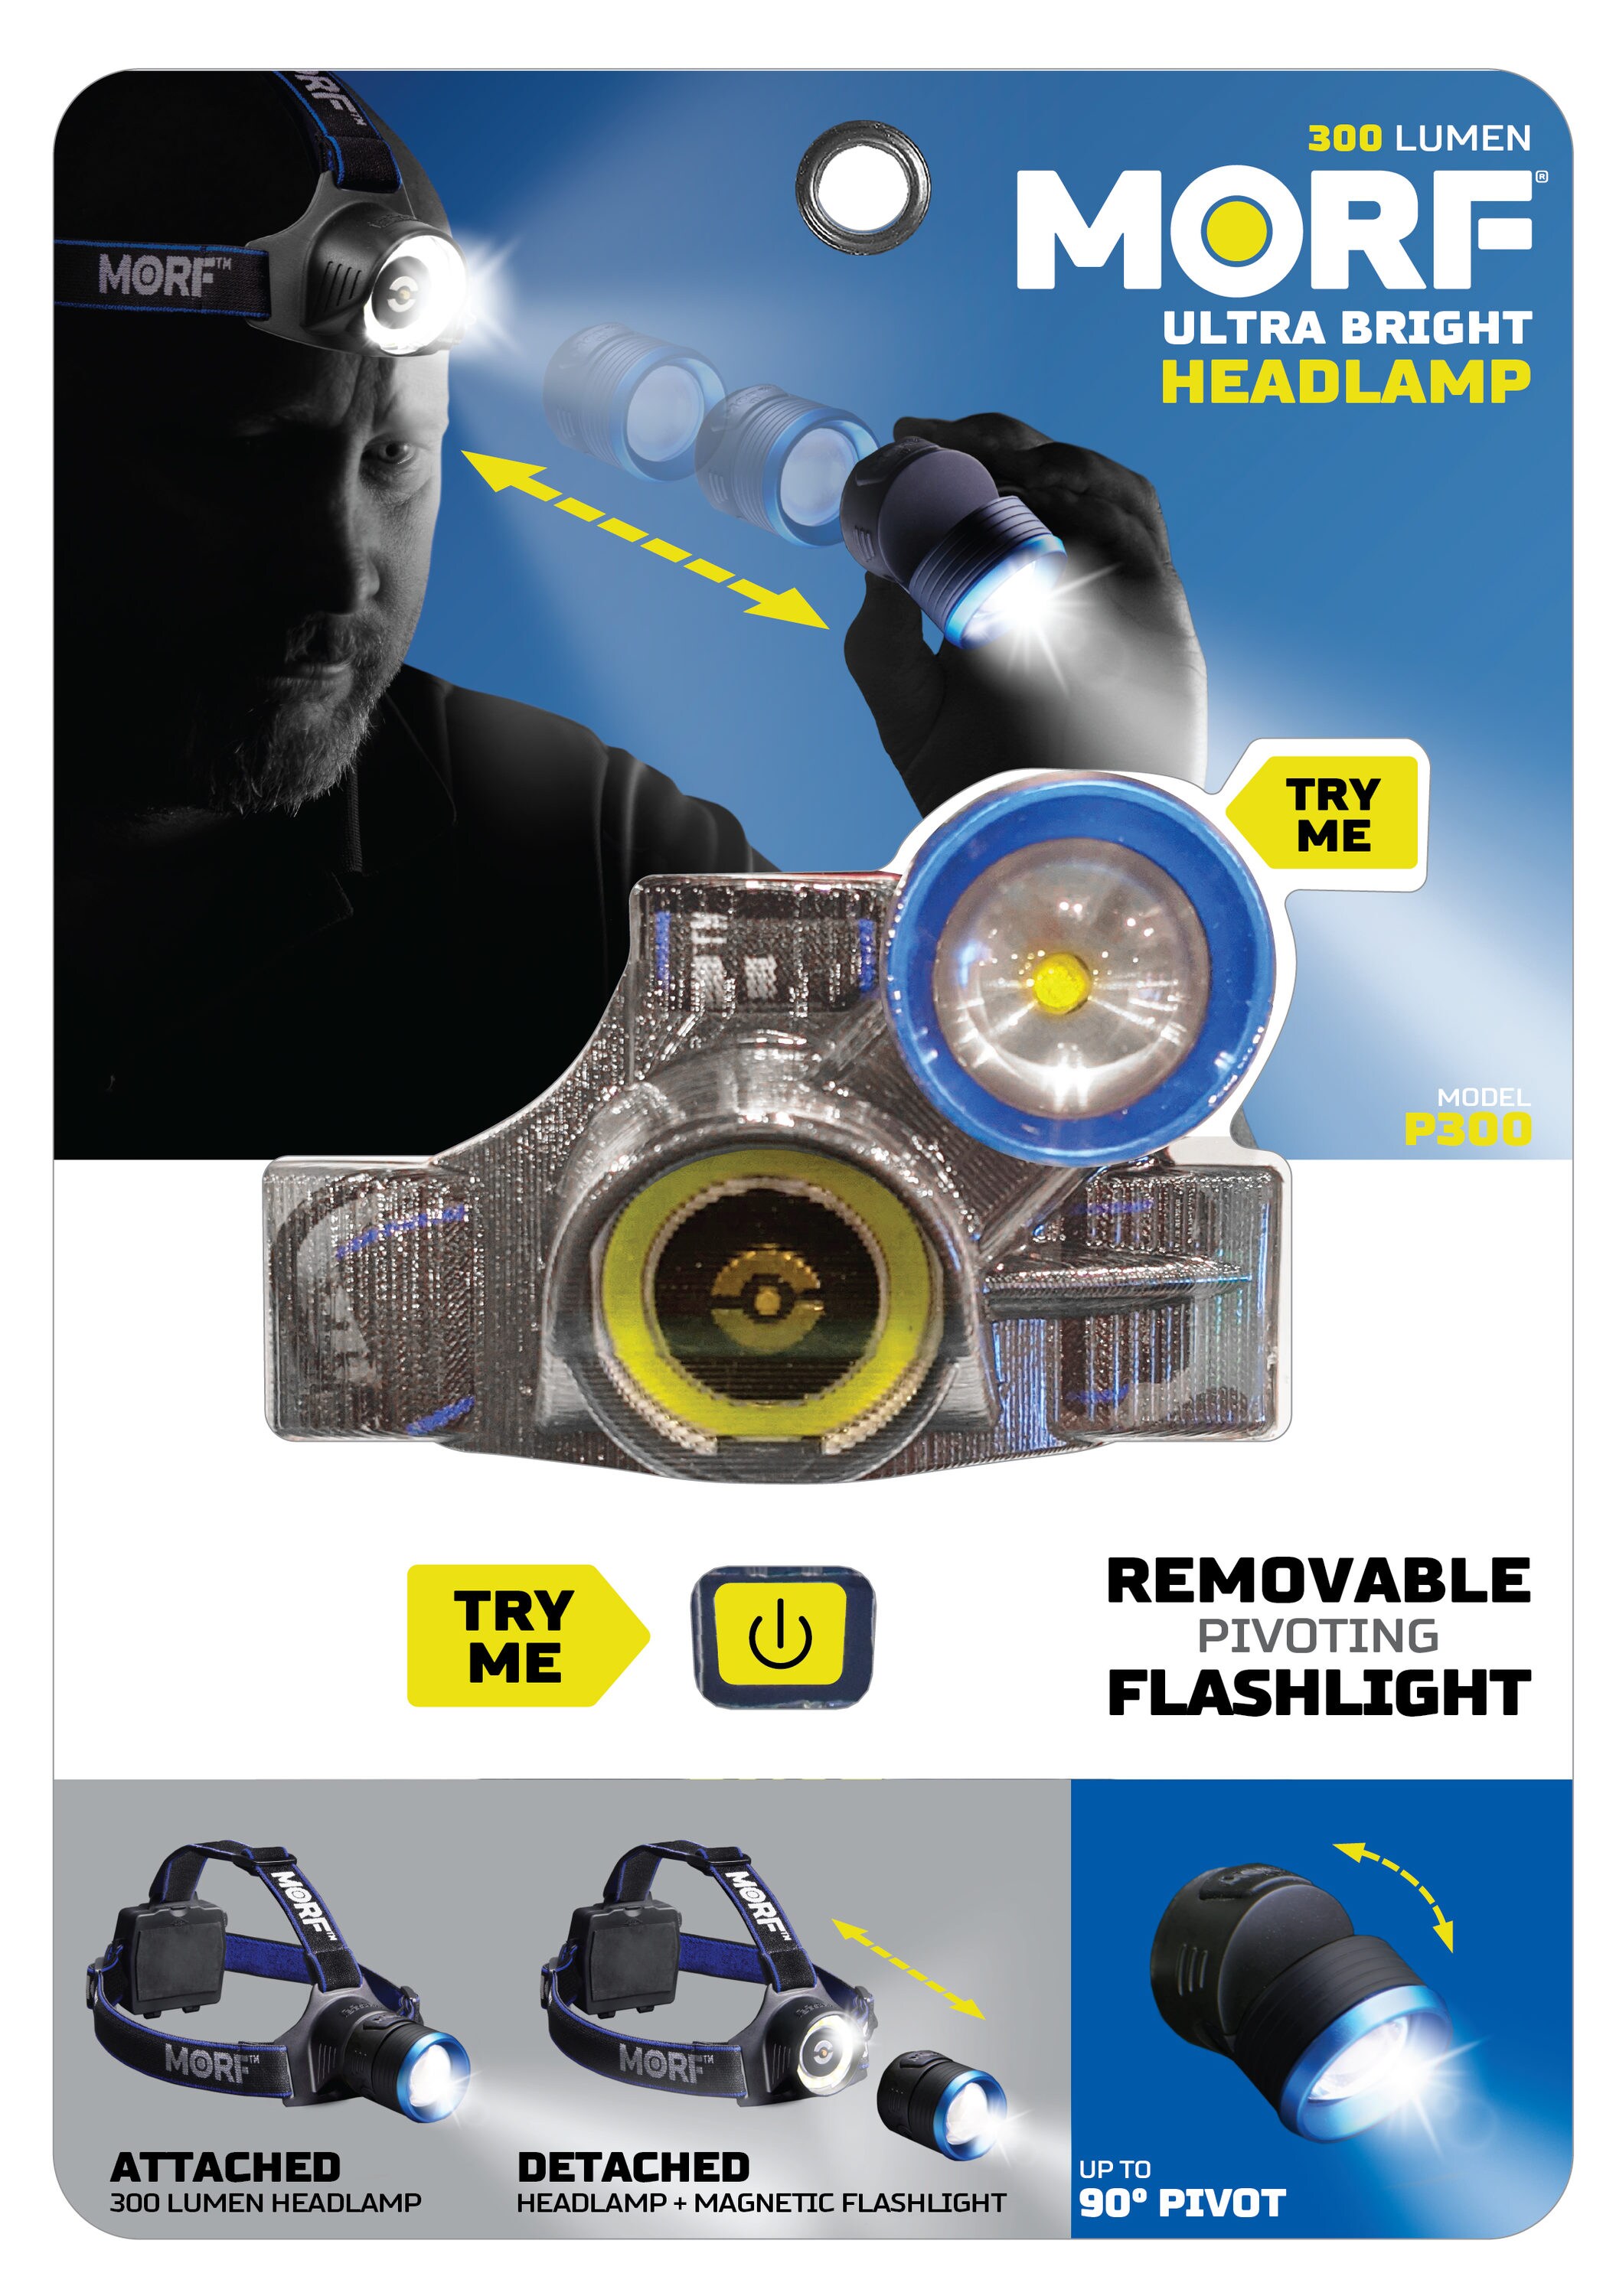 police security flashlight headlamp Off 76%